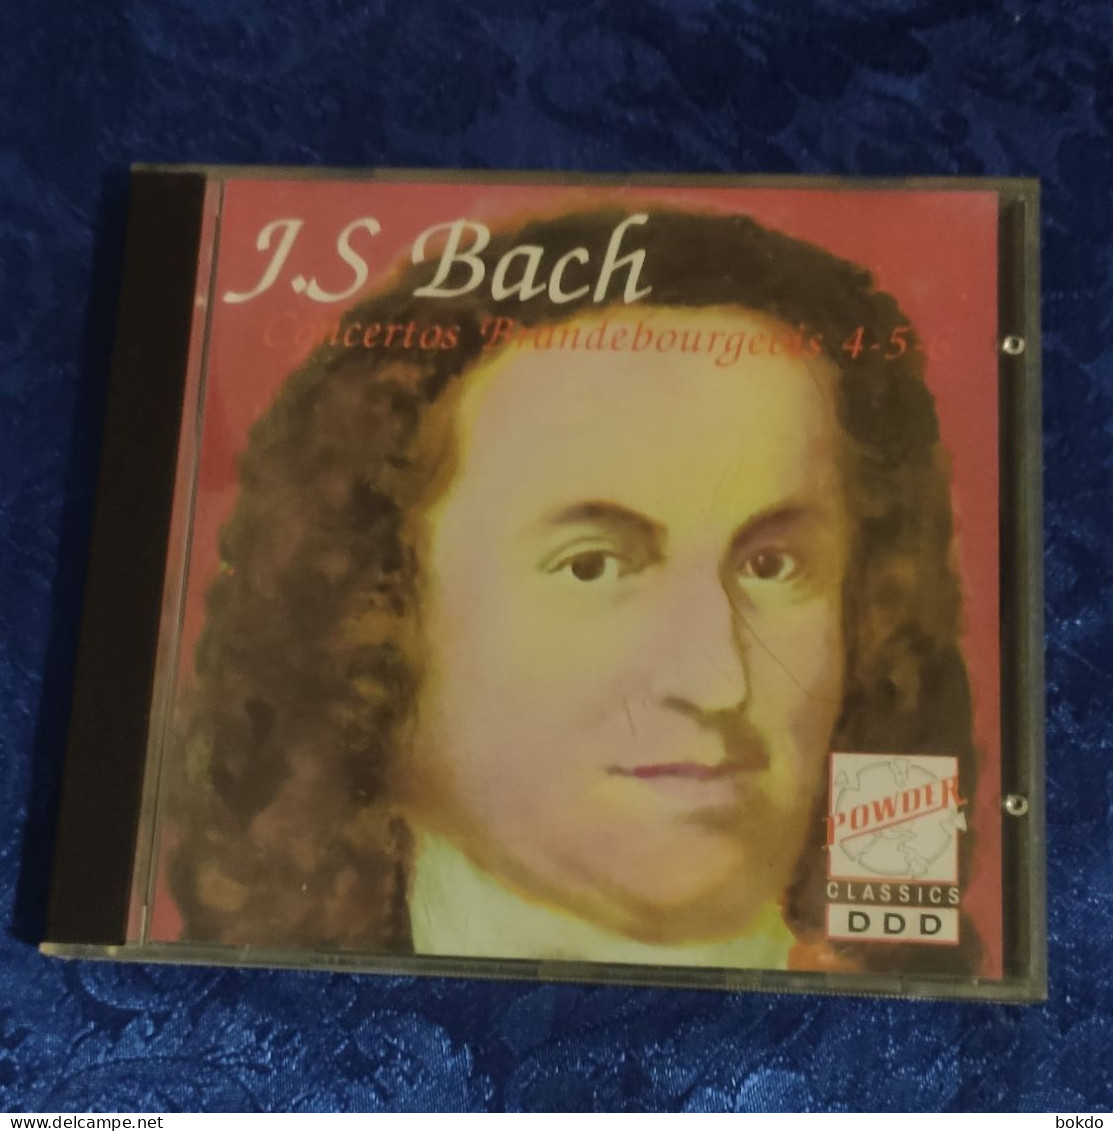 J.S. BACH - Concertos Frandebourgeois 4-5 - Classical